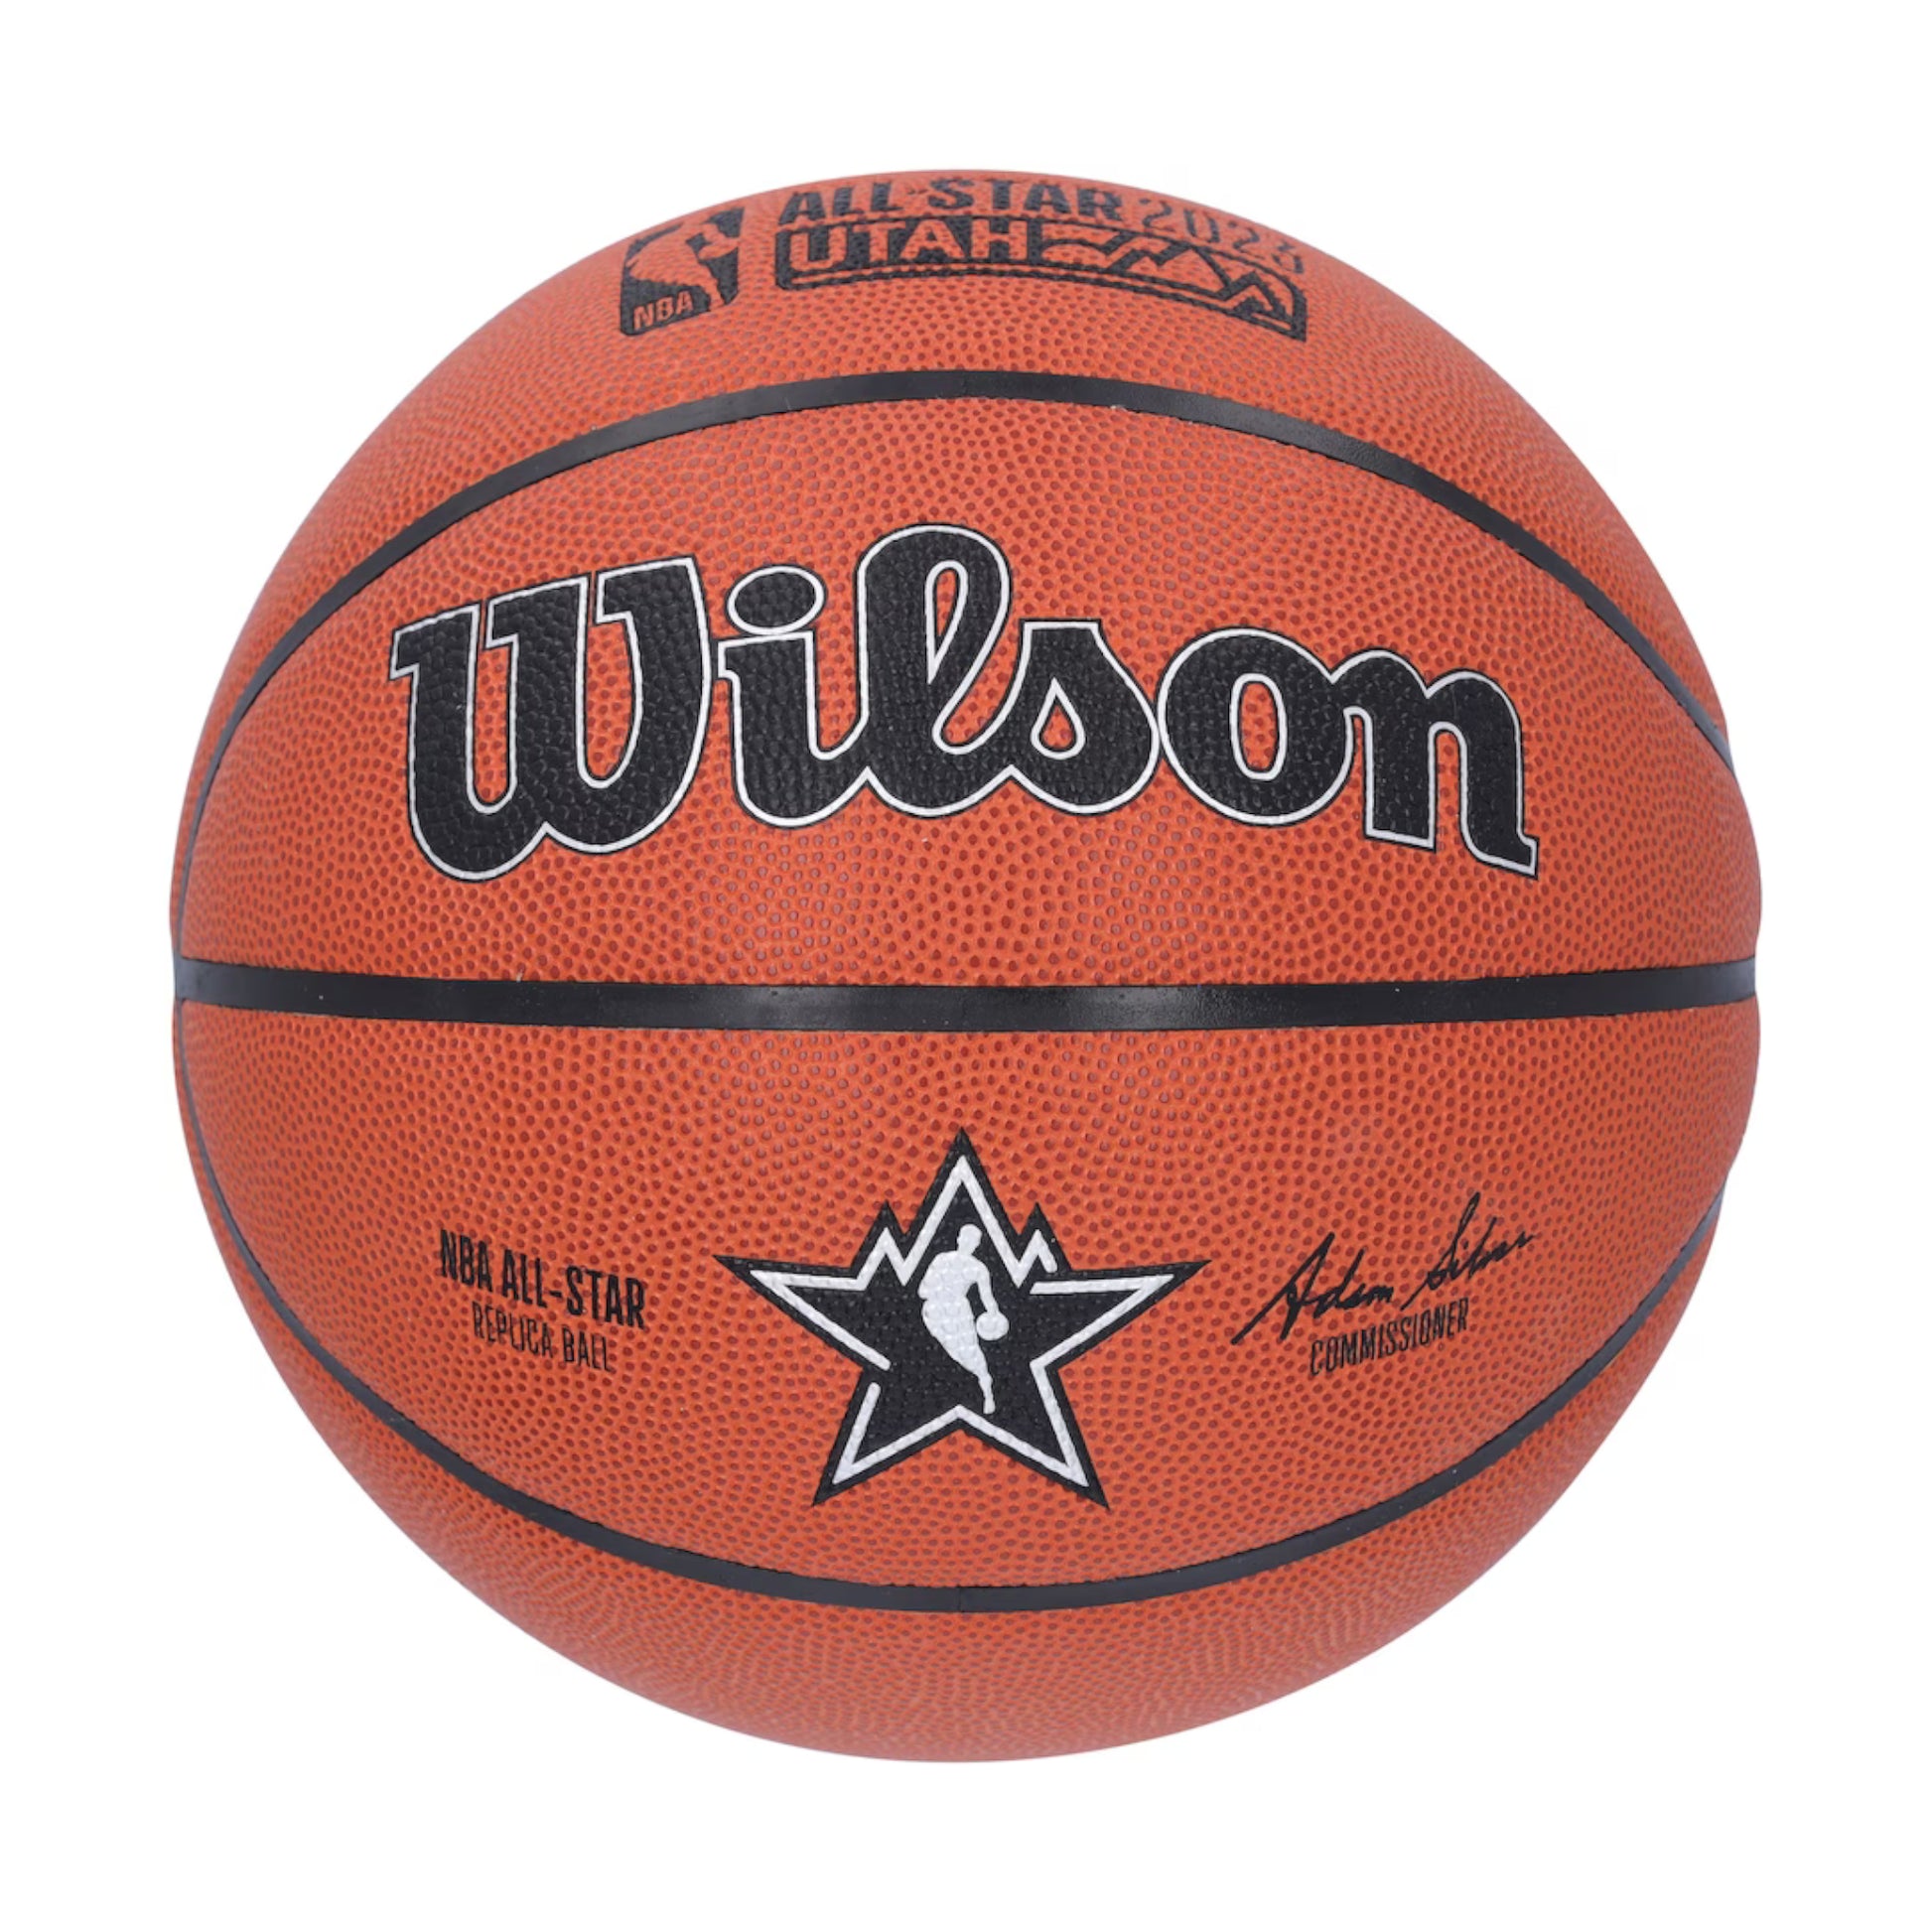 Jayson Tatum Boston Celtics Autographed Nike 2023 NBA All-Star Game  Swingman Jersey with 23 ASG MVP Inscription